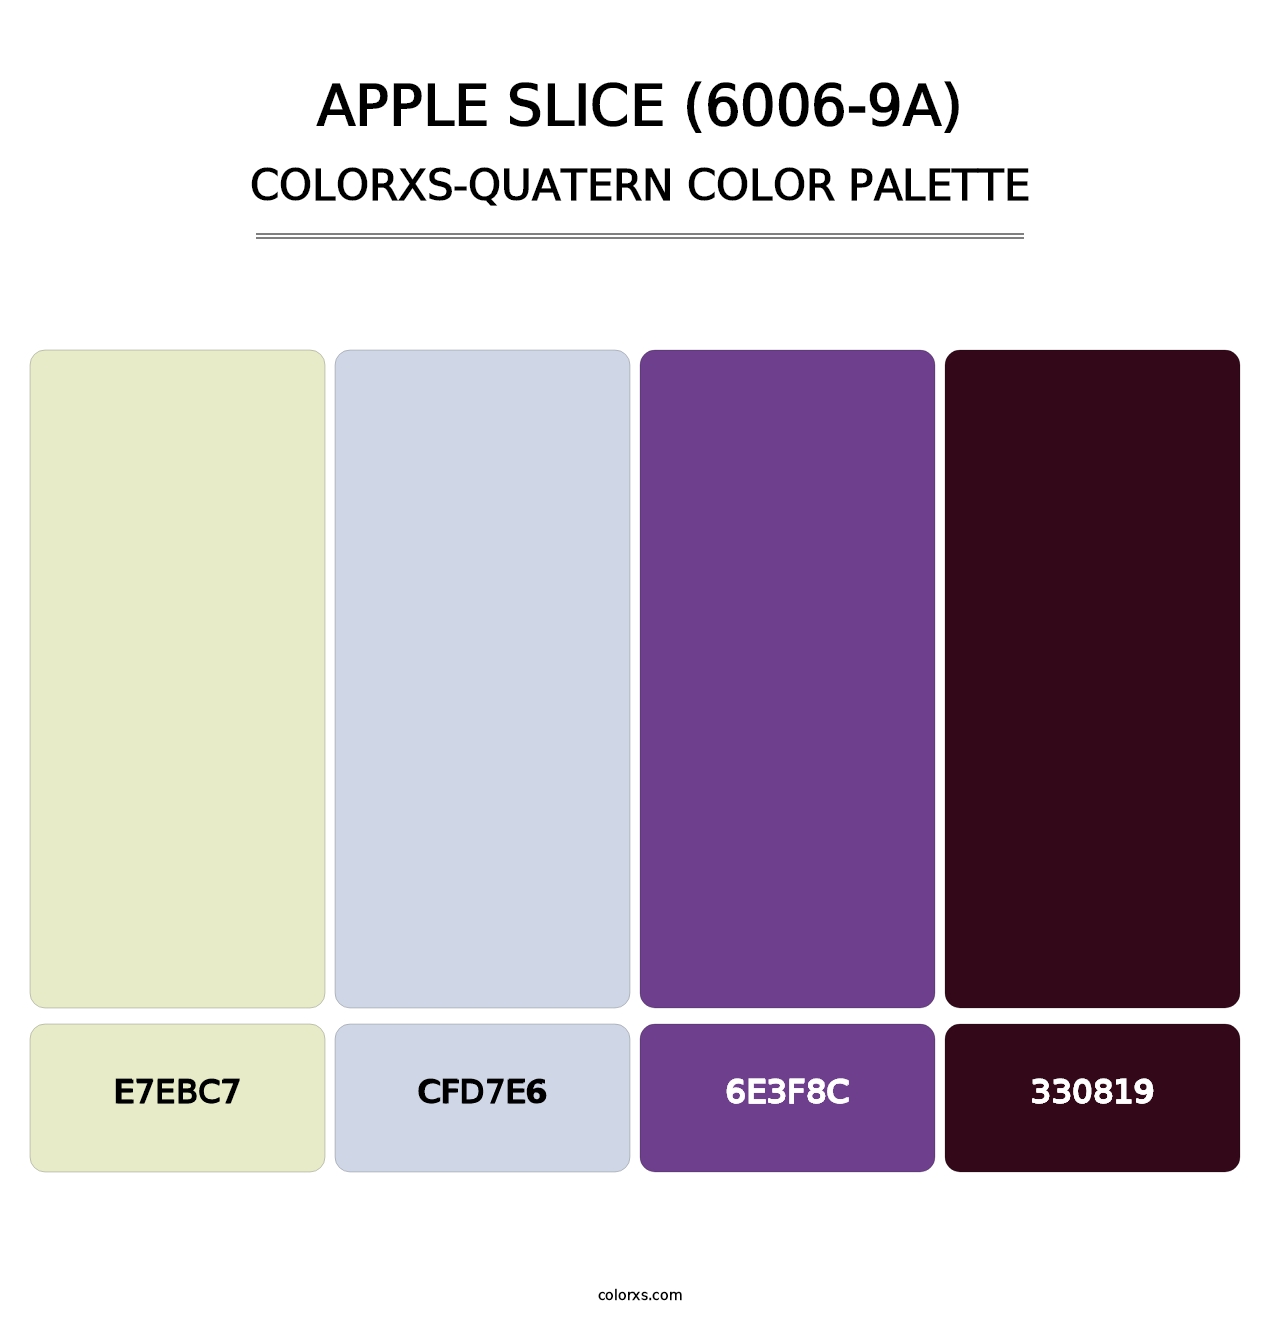 Apple Slice (6006-9A) - Colorxs Quatern Palette